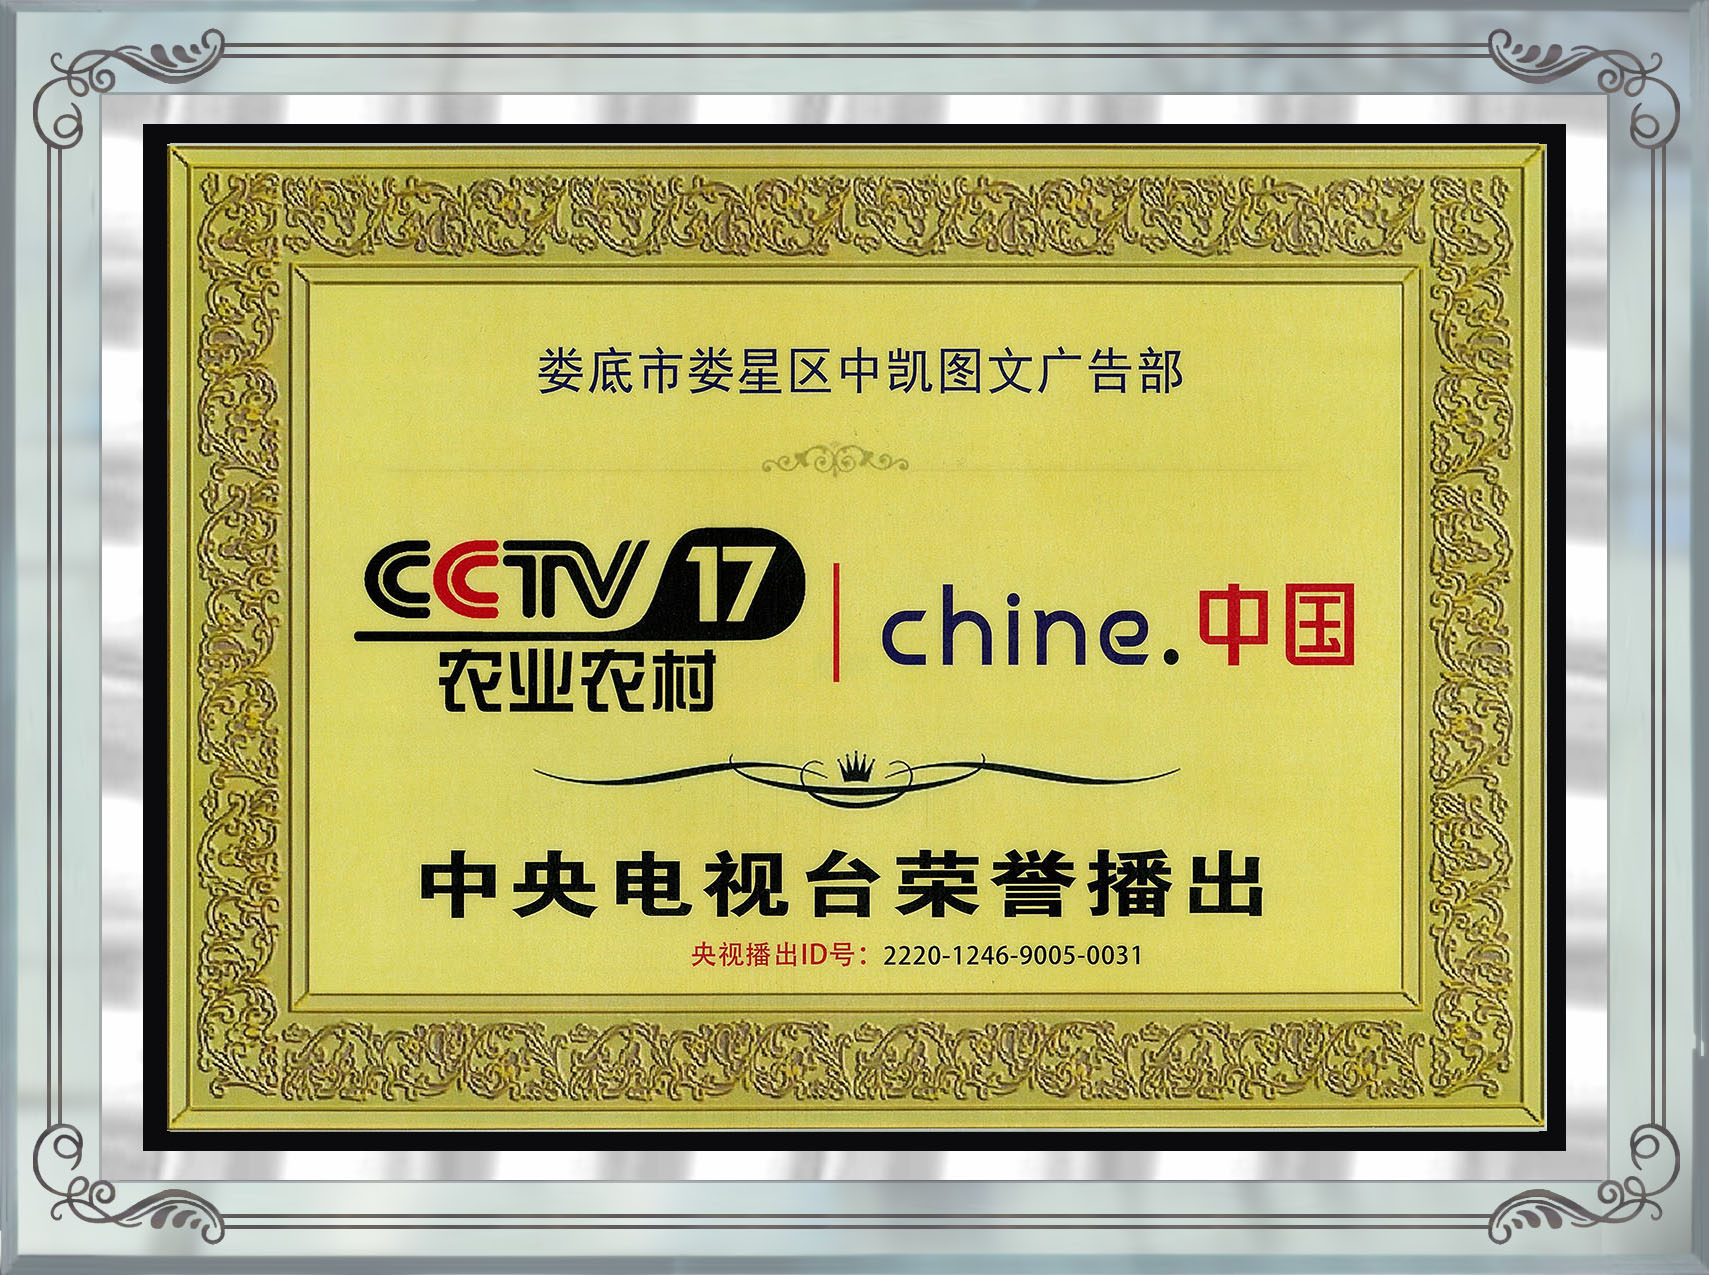 CCTV17.jpg